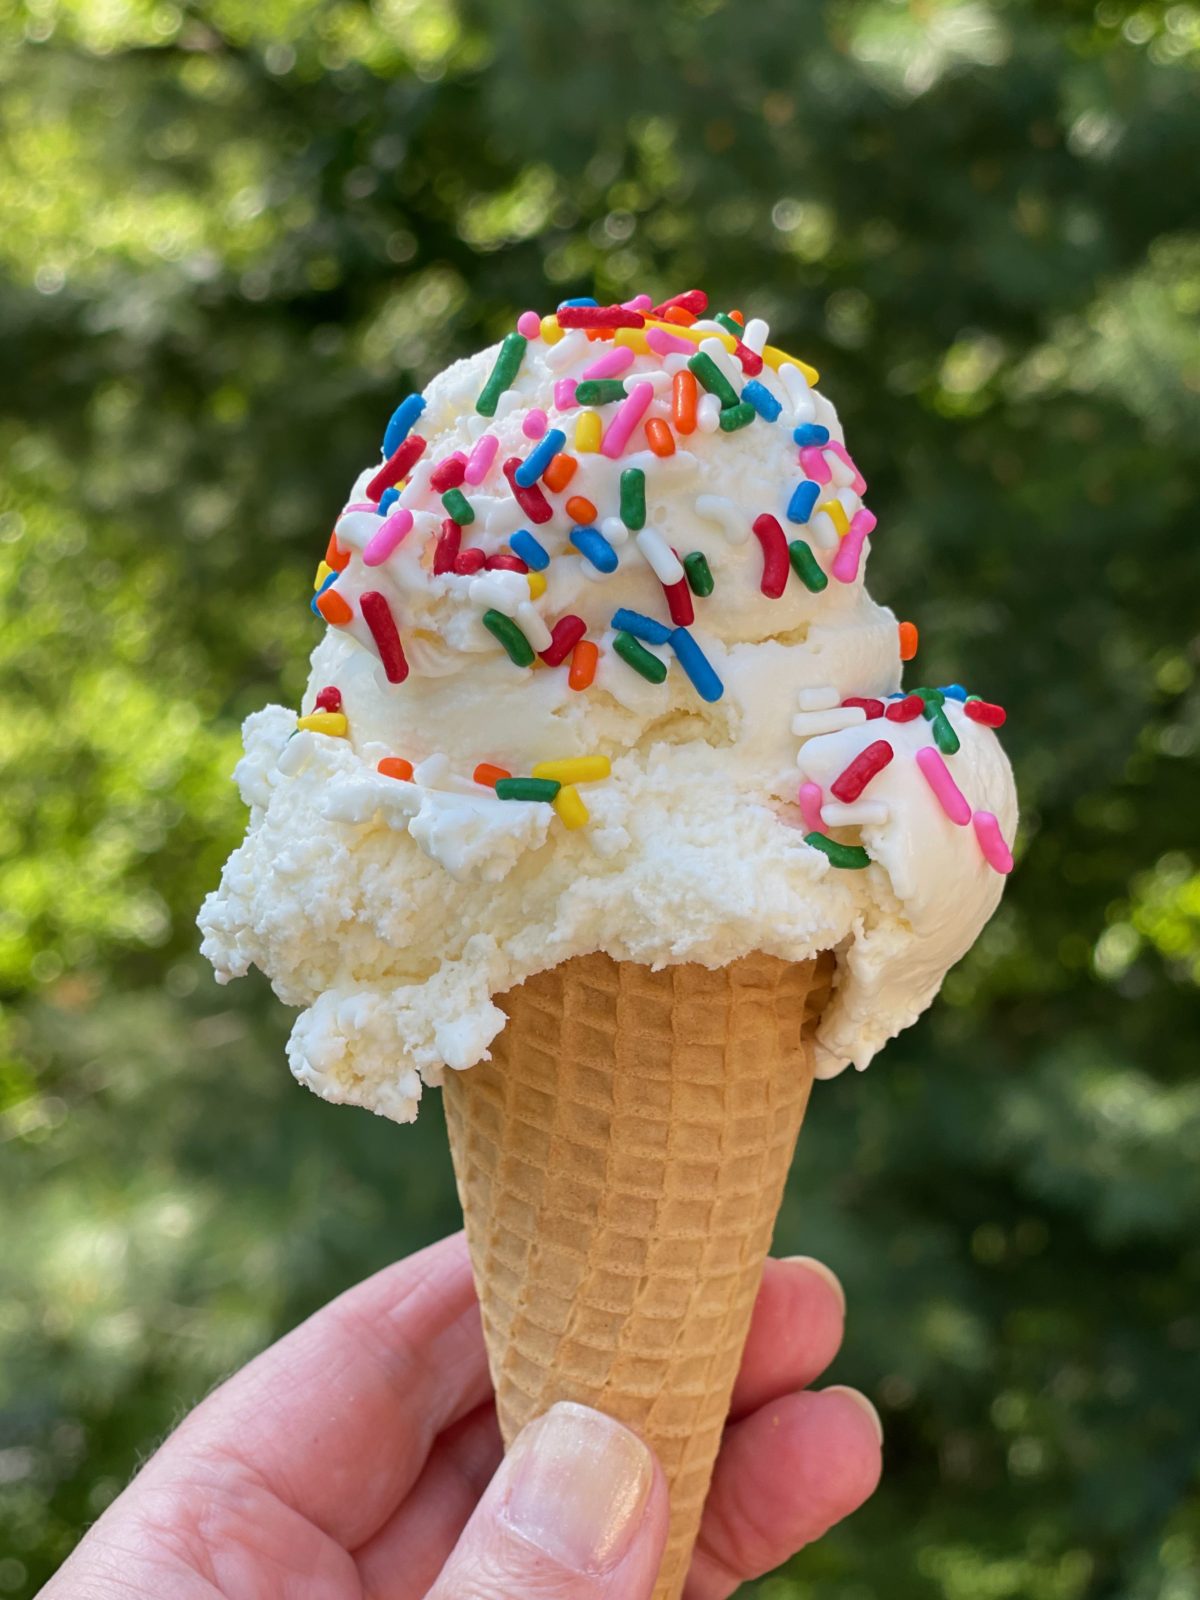 Simple KitchenAid Vanilla Ice Cream Recipe - Exquisitely Unremarkable